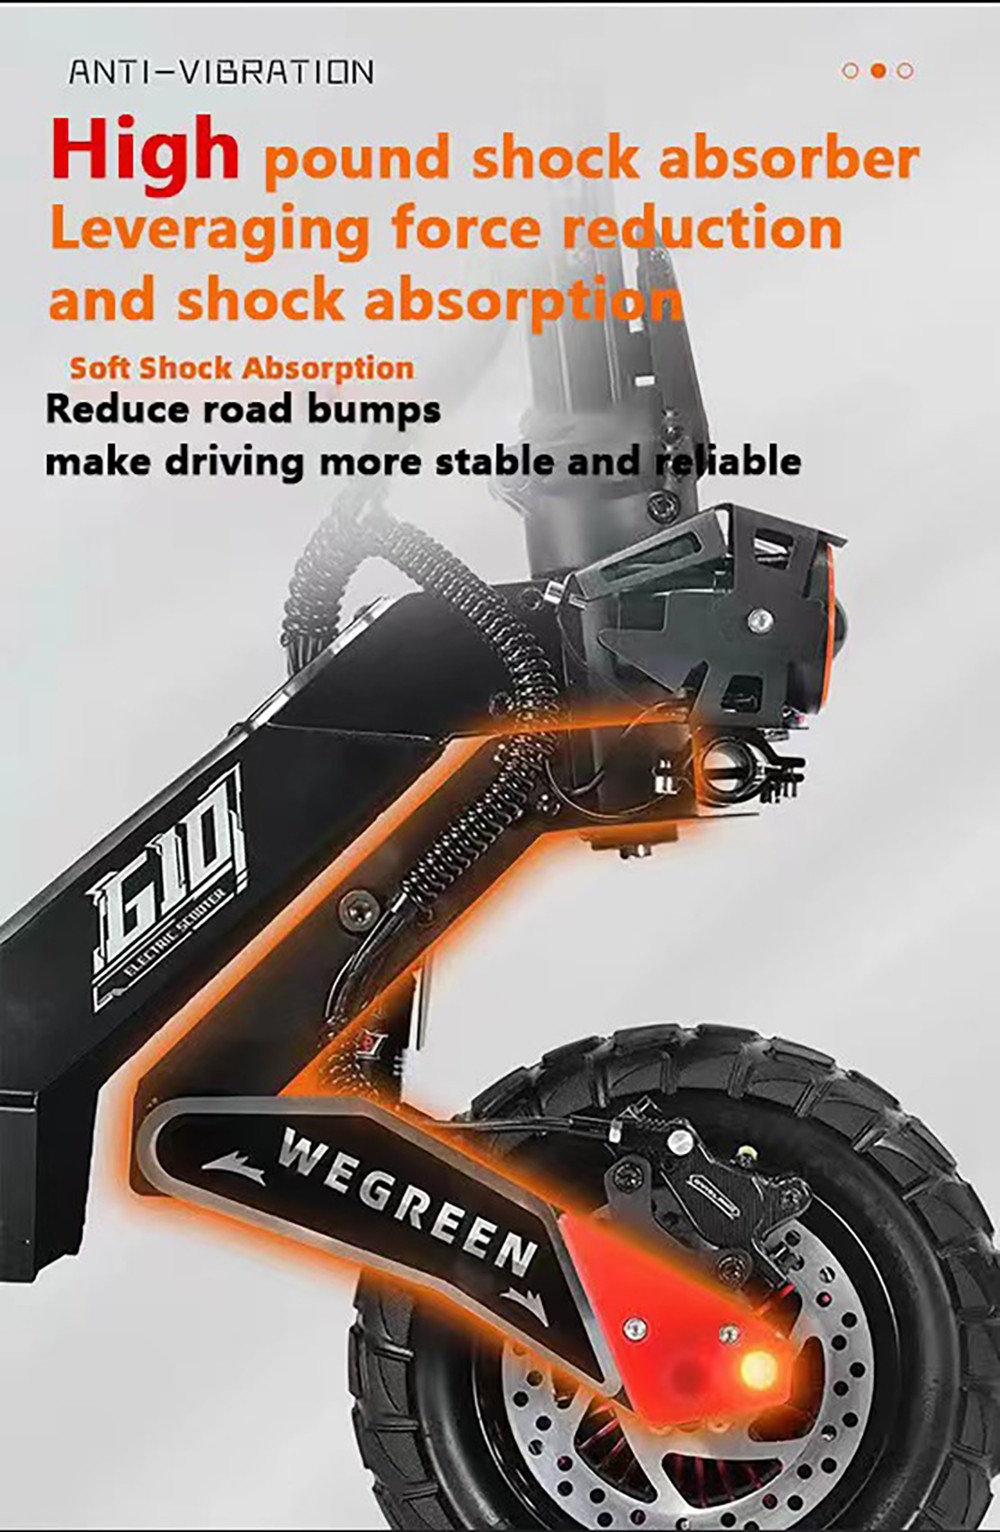 OBARTER G10 elektrische scooter, 2 * 1200W dubbele motor, 48V 20Ah batterij, 10 Inch Off-Road banden, 65 km / h Max snelheid